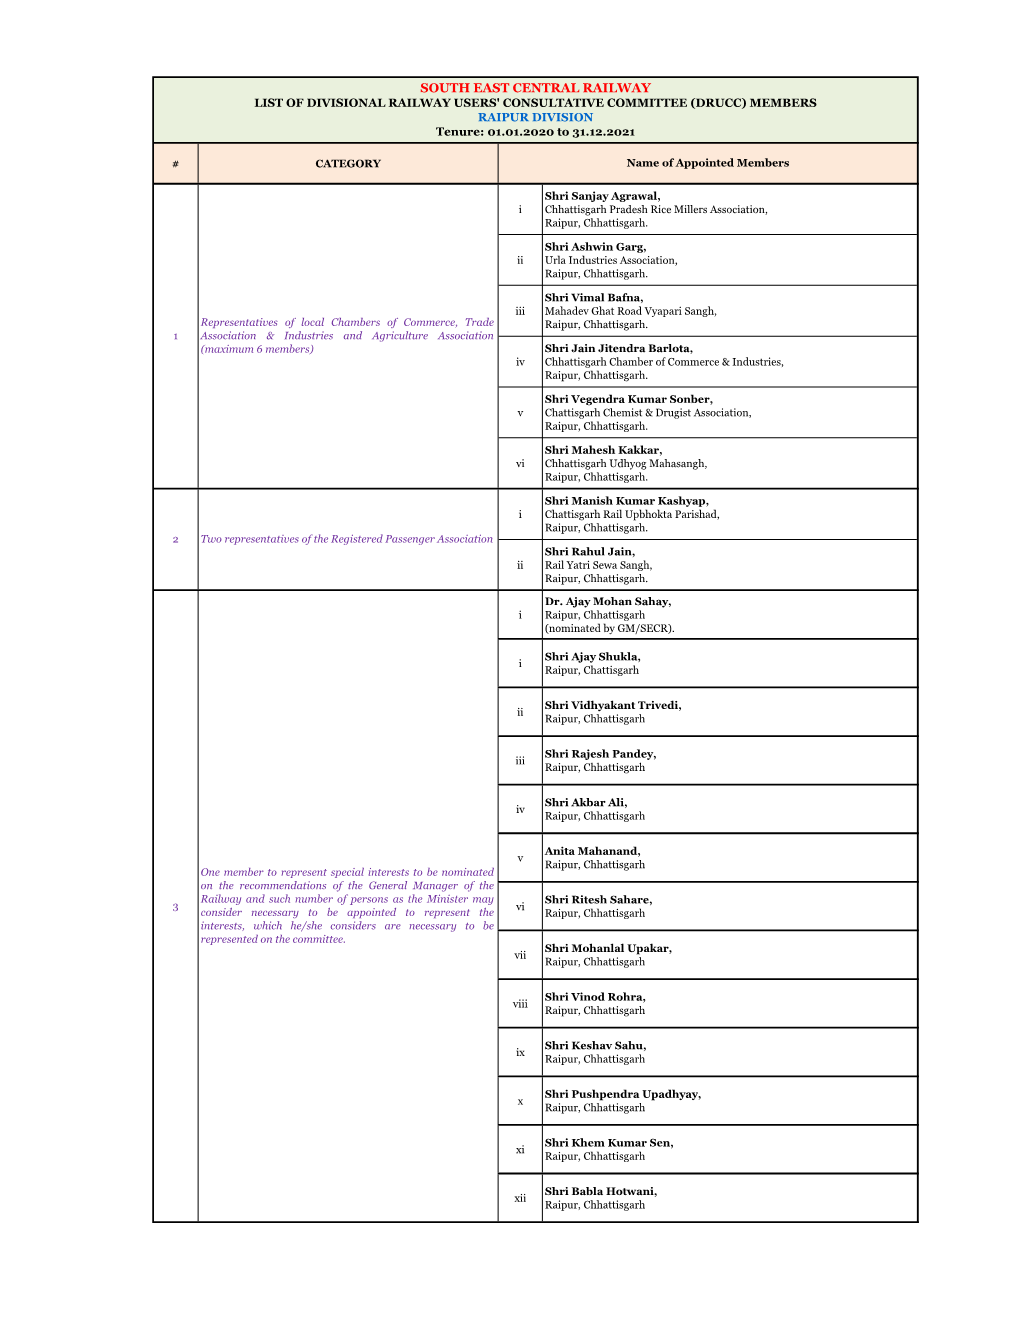 List of Drucc Member of Raipur Division